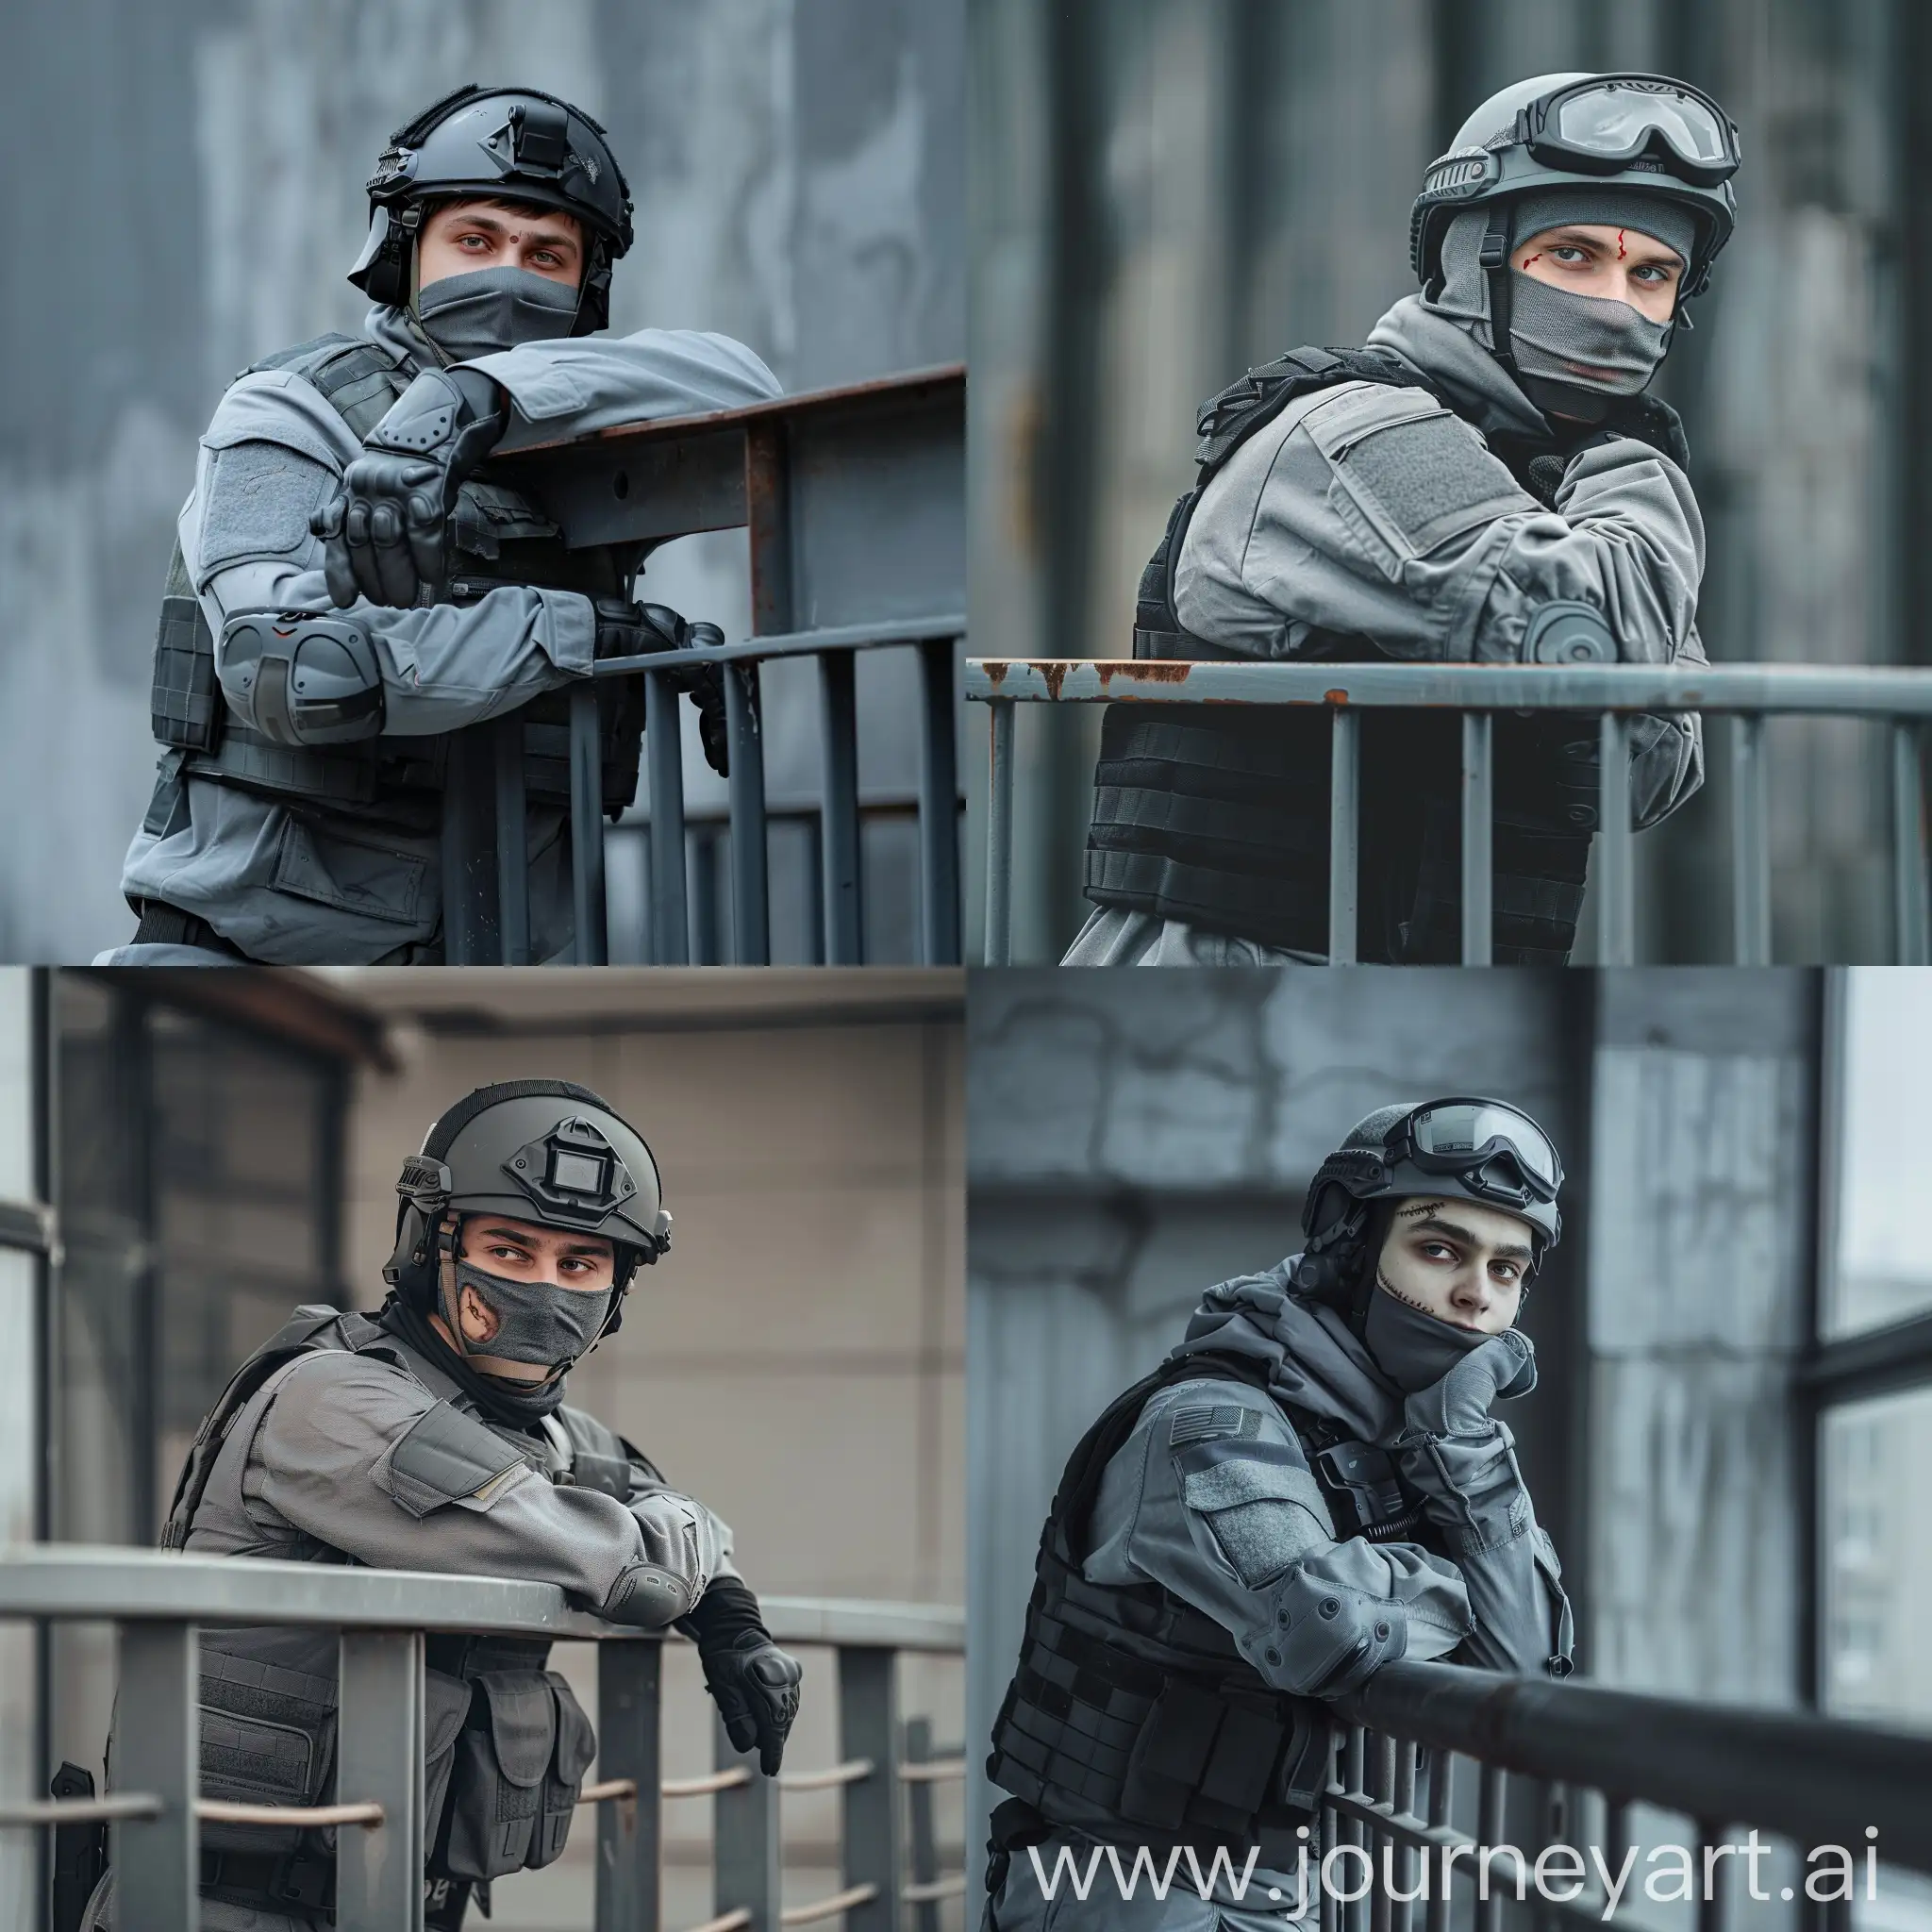 Security-Guard-on-Duty-Vigilant-Sentinel-in-Gray-Uniform-and-Body-Armor